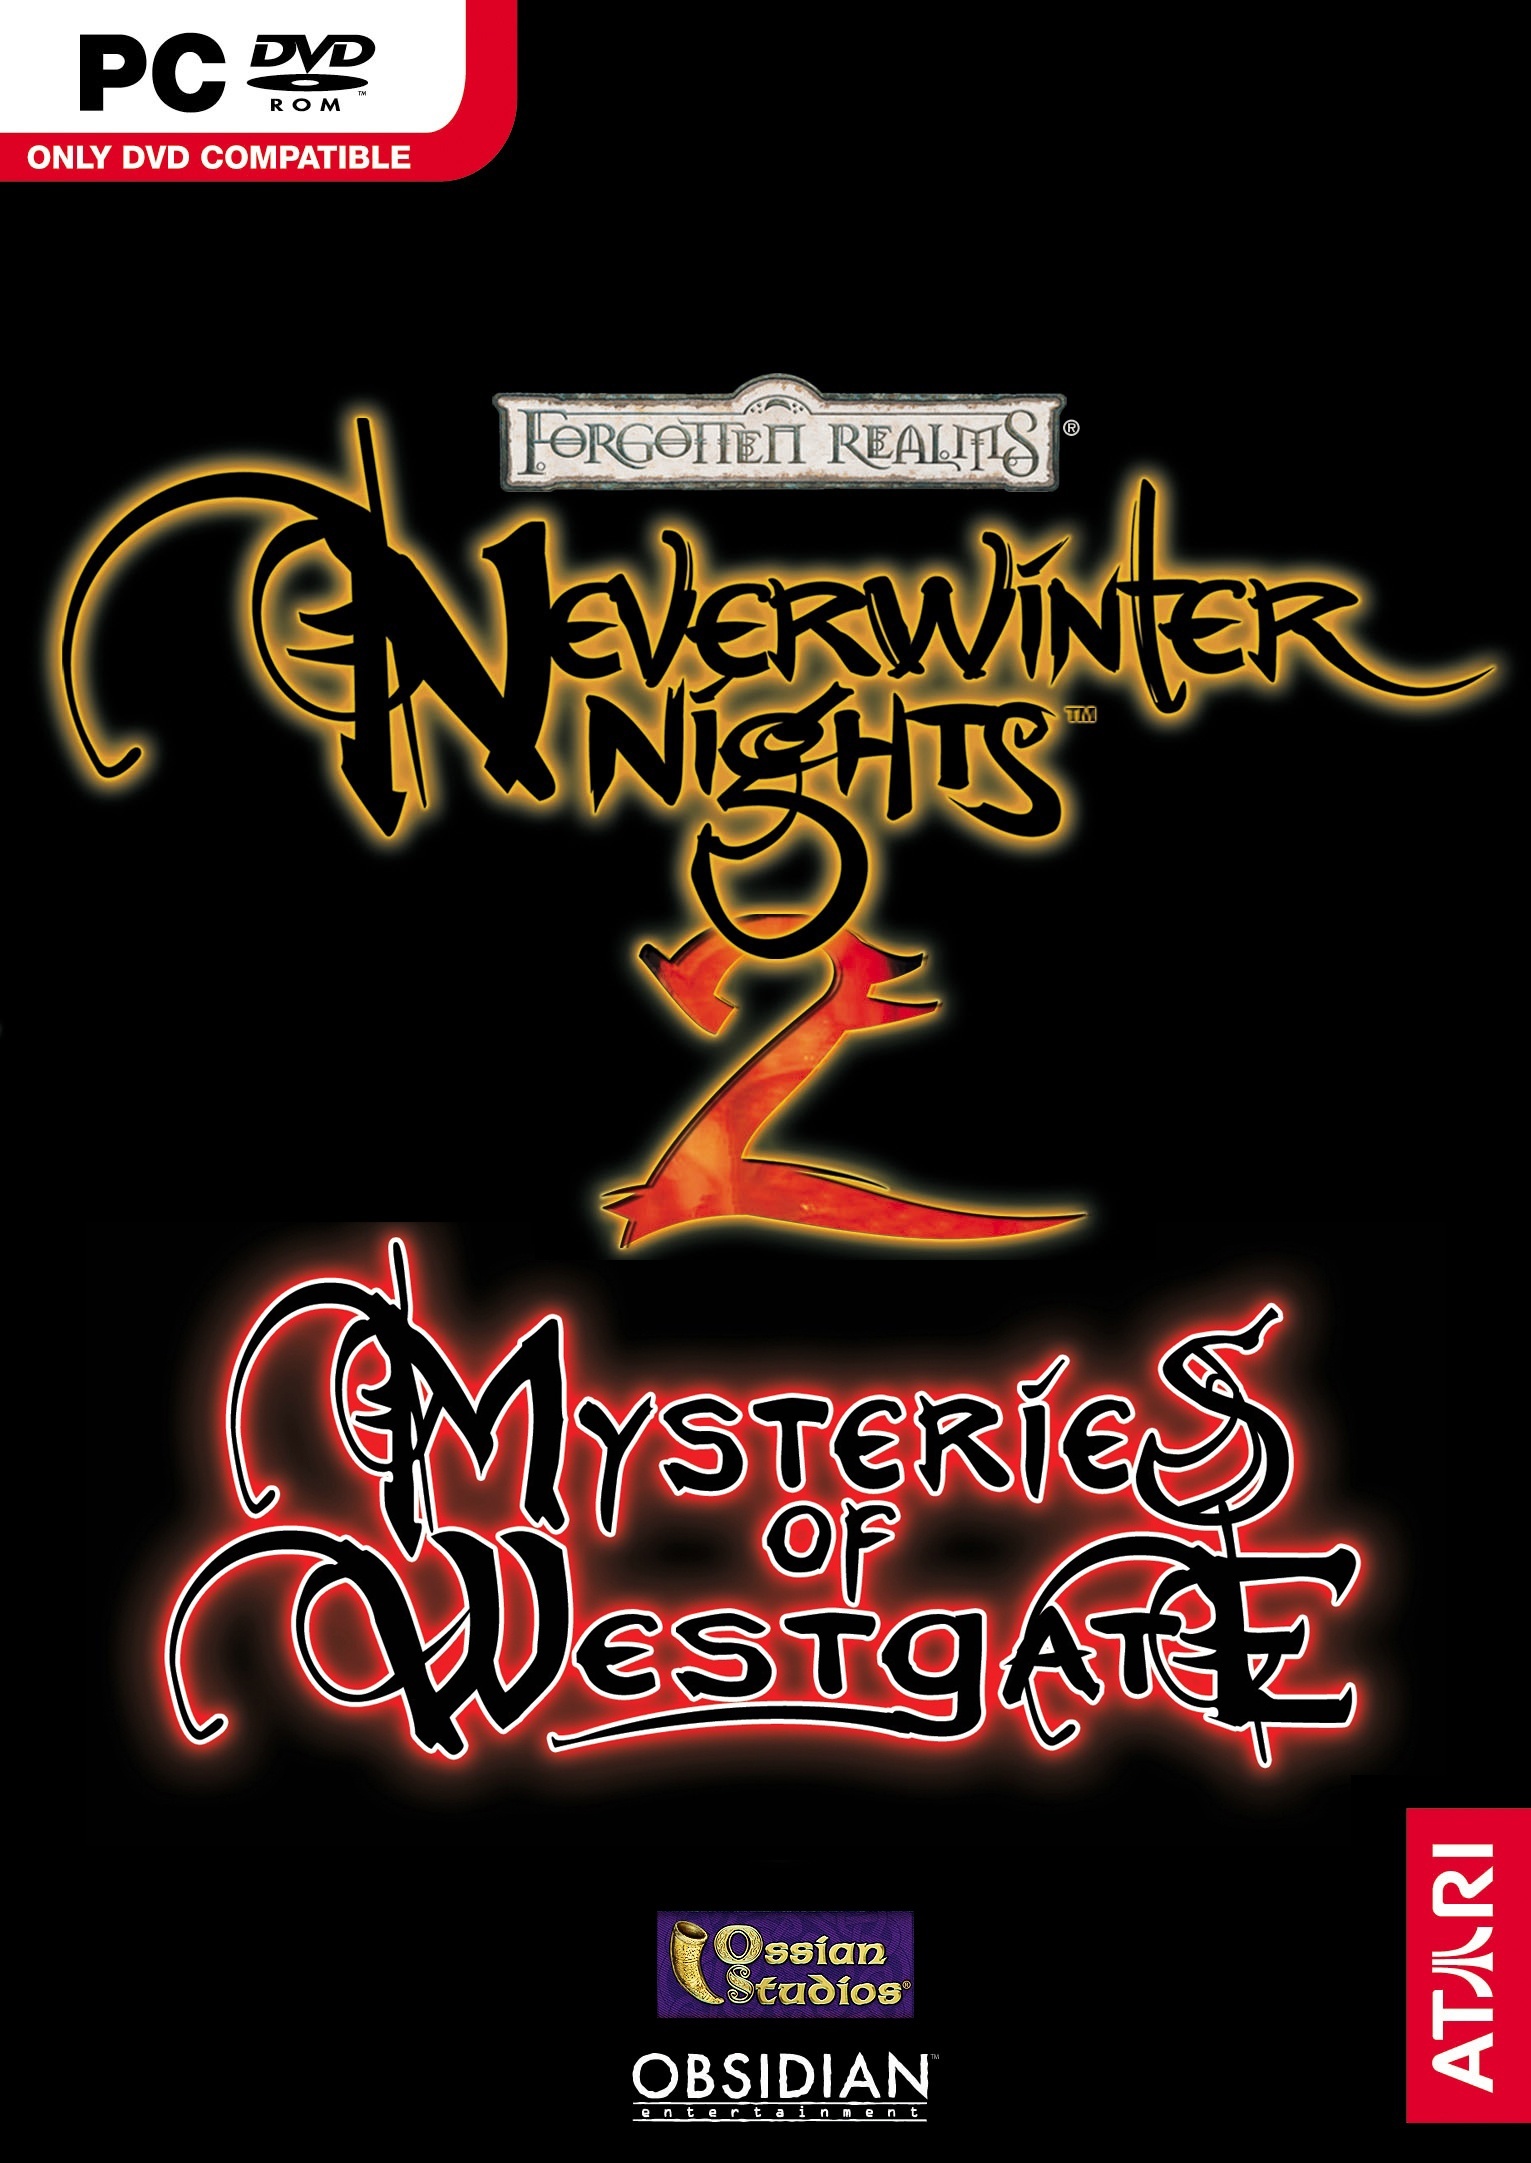 jaquette du jeu vidéo Neverwinter Nights 2: Mysteries of Westgate